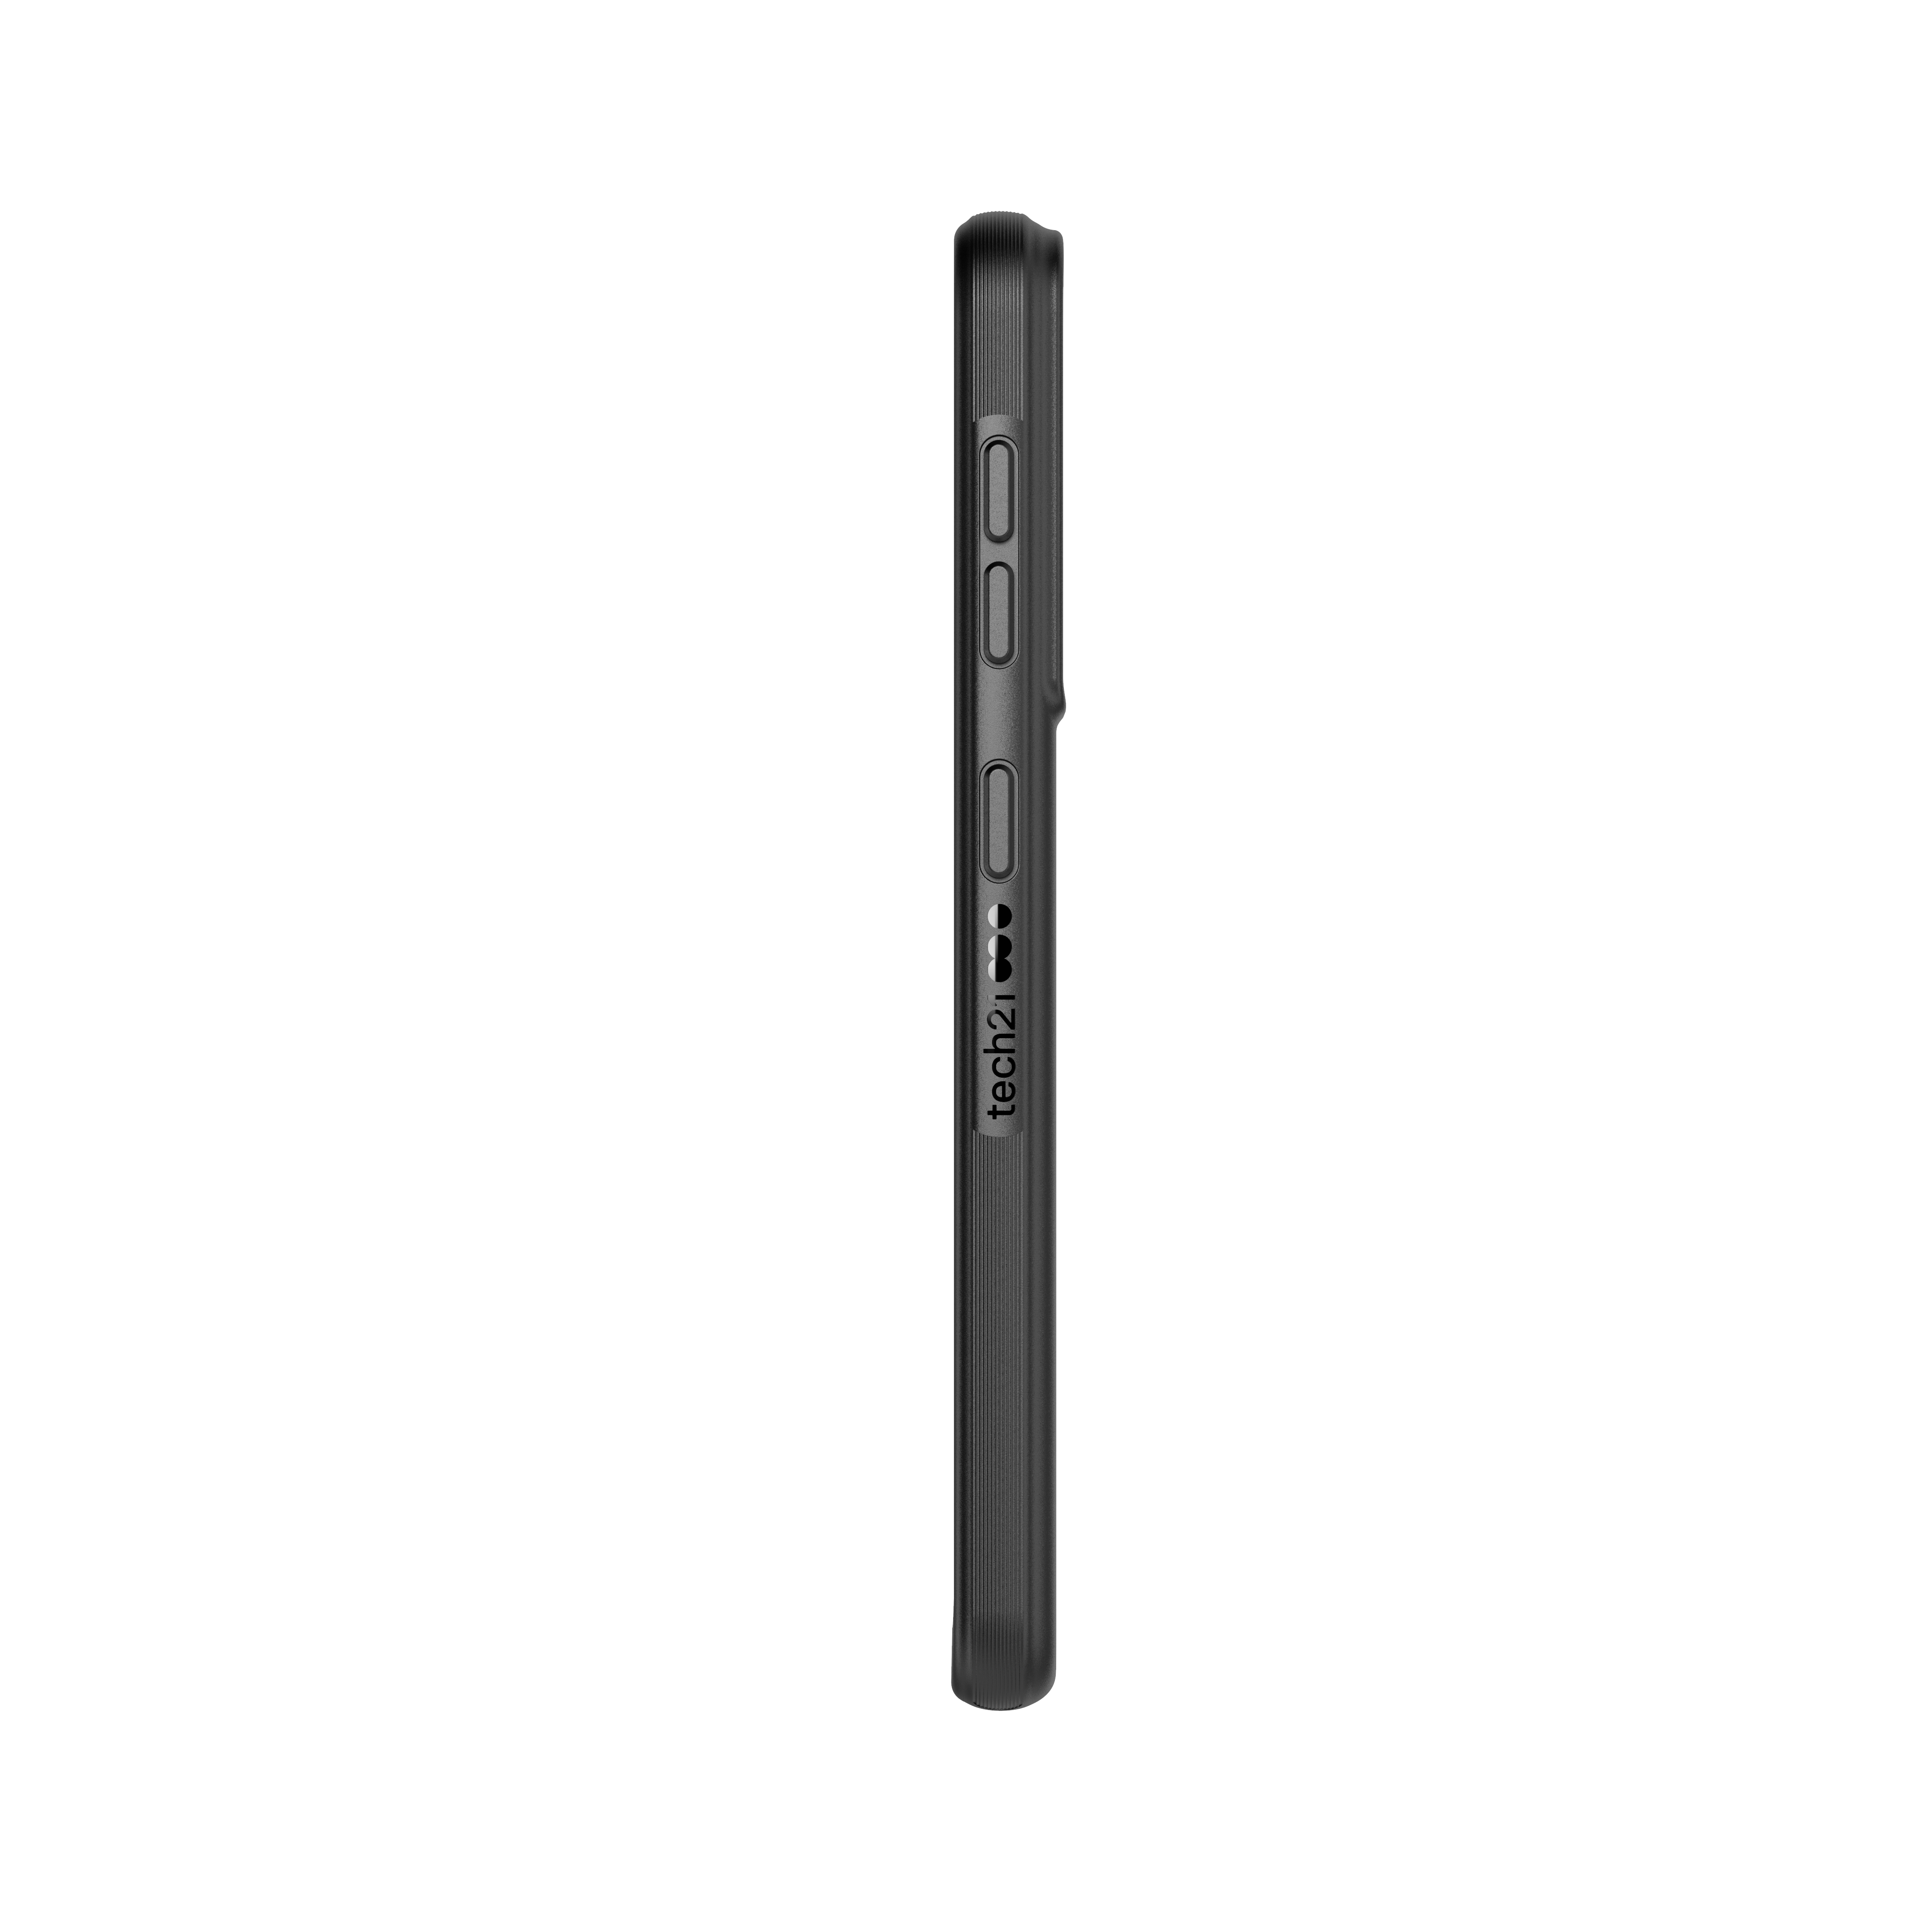 Evo Slim Case Galaxy S21 Charcoal Black